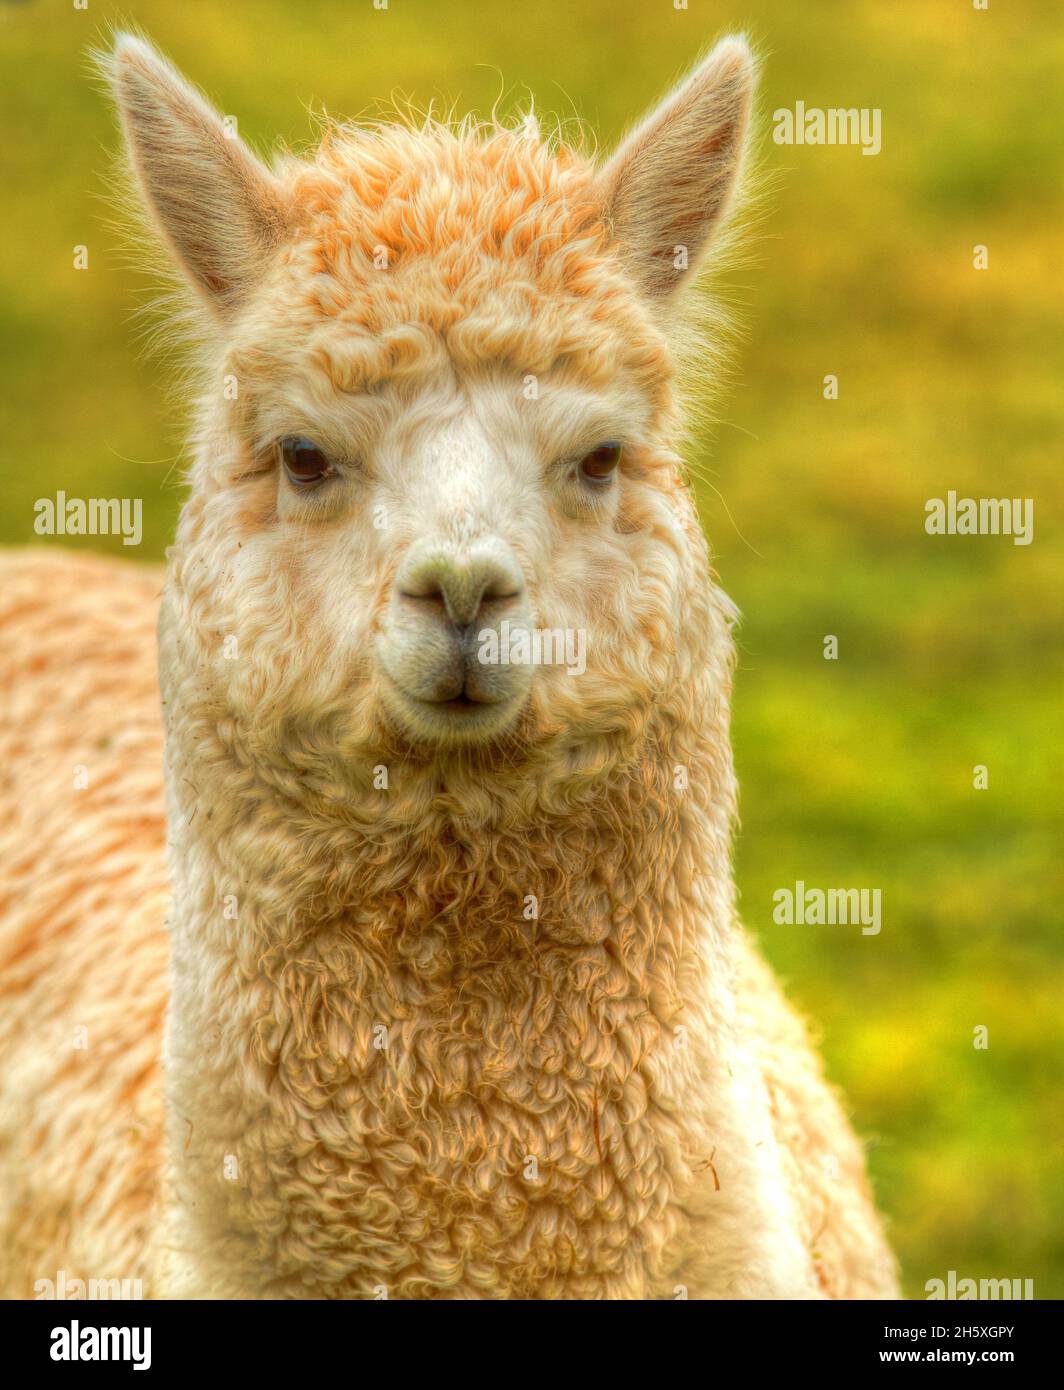 Alpaca portrait looking to camera in green field Stock Photo